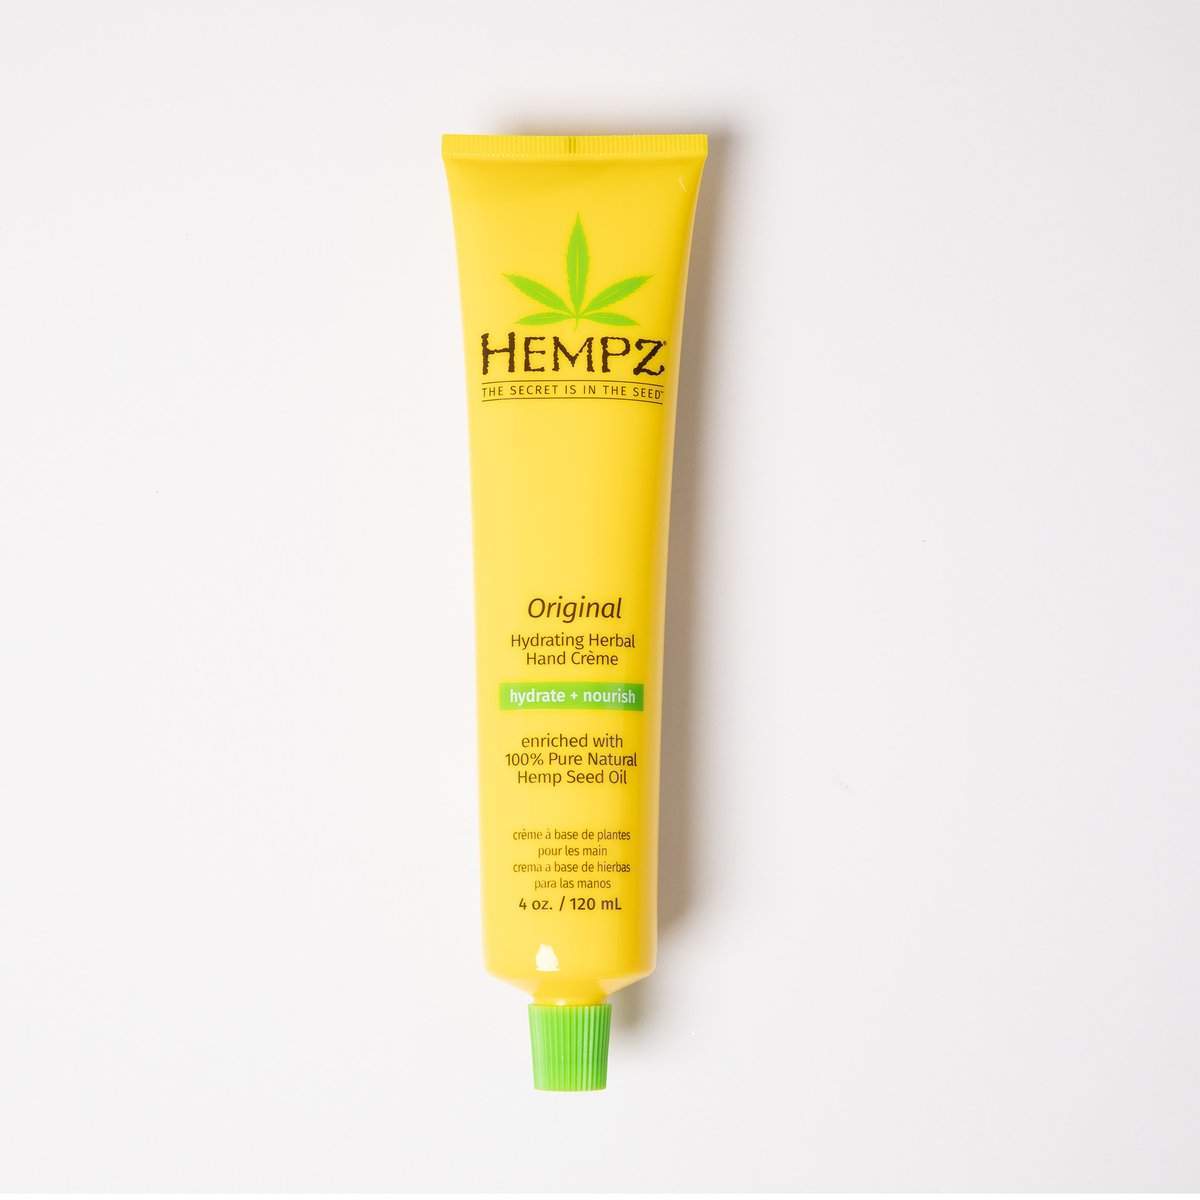 Hempz Original Hydrating Herbal Hand Creme 4 oz.-Hempz-BB_Hand and Foot Cream,BB_Lotion,BB_Moisturizers,Brand_Hempz,Collection_Bath and Body,Hempz_Body Moisturizers